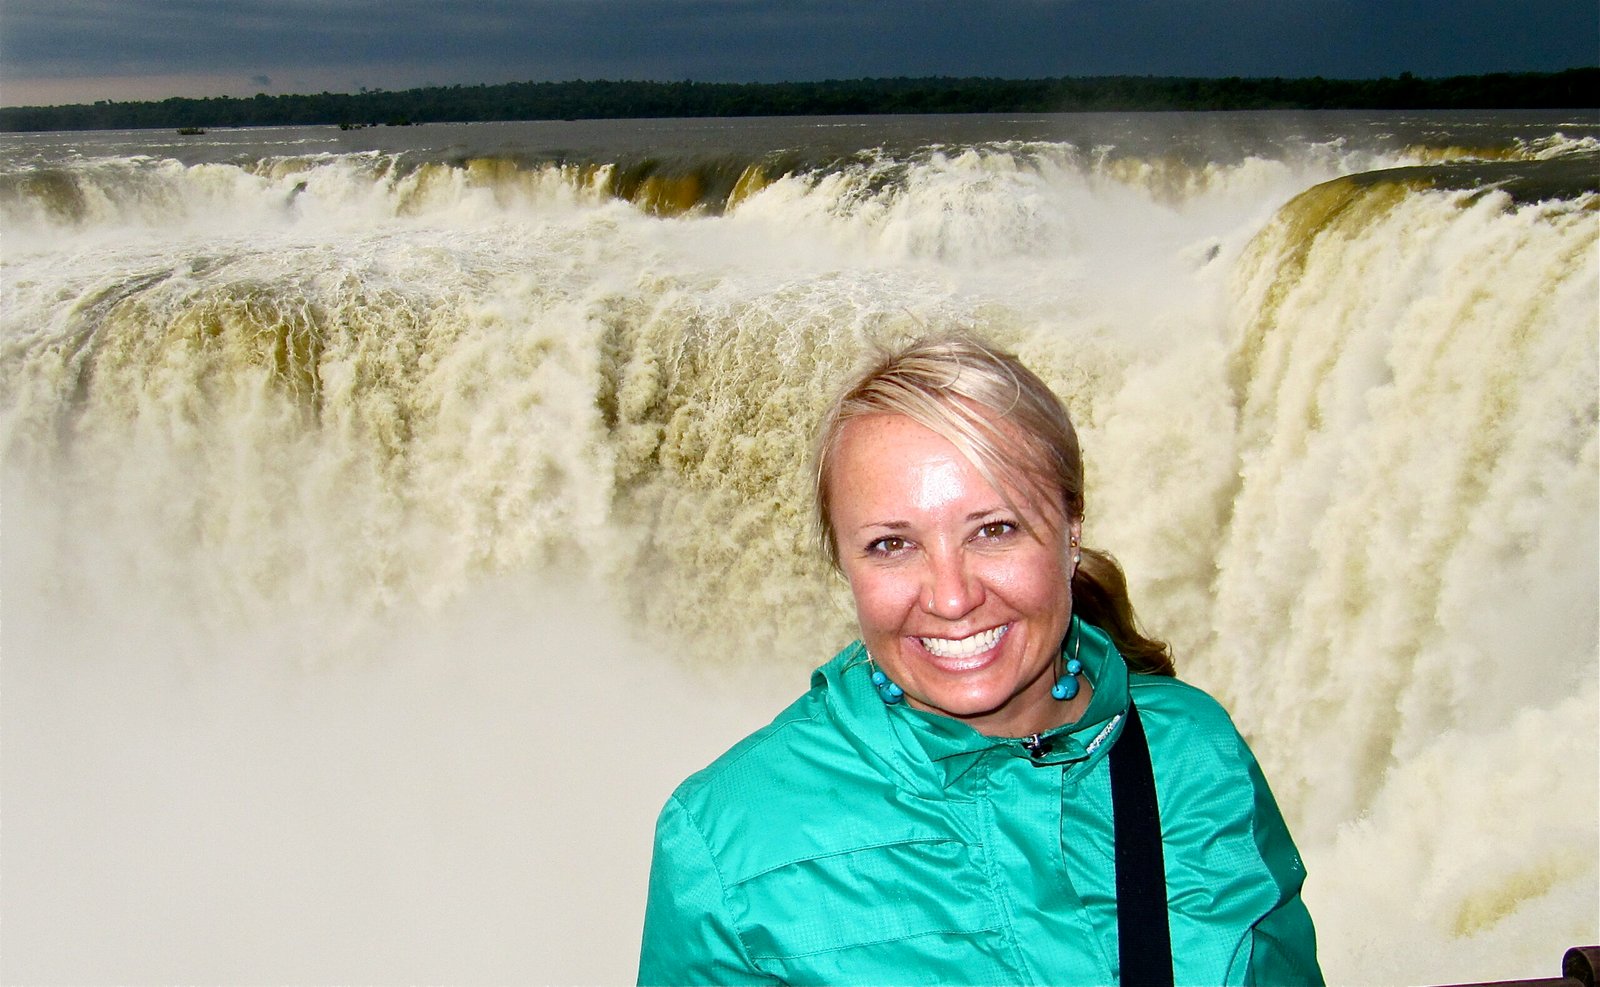 Keri at Iguazu Falls